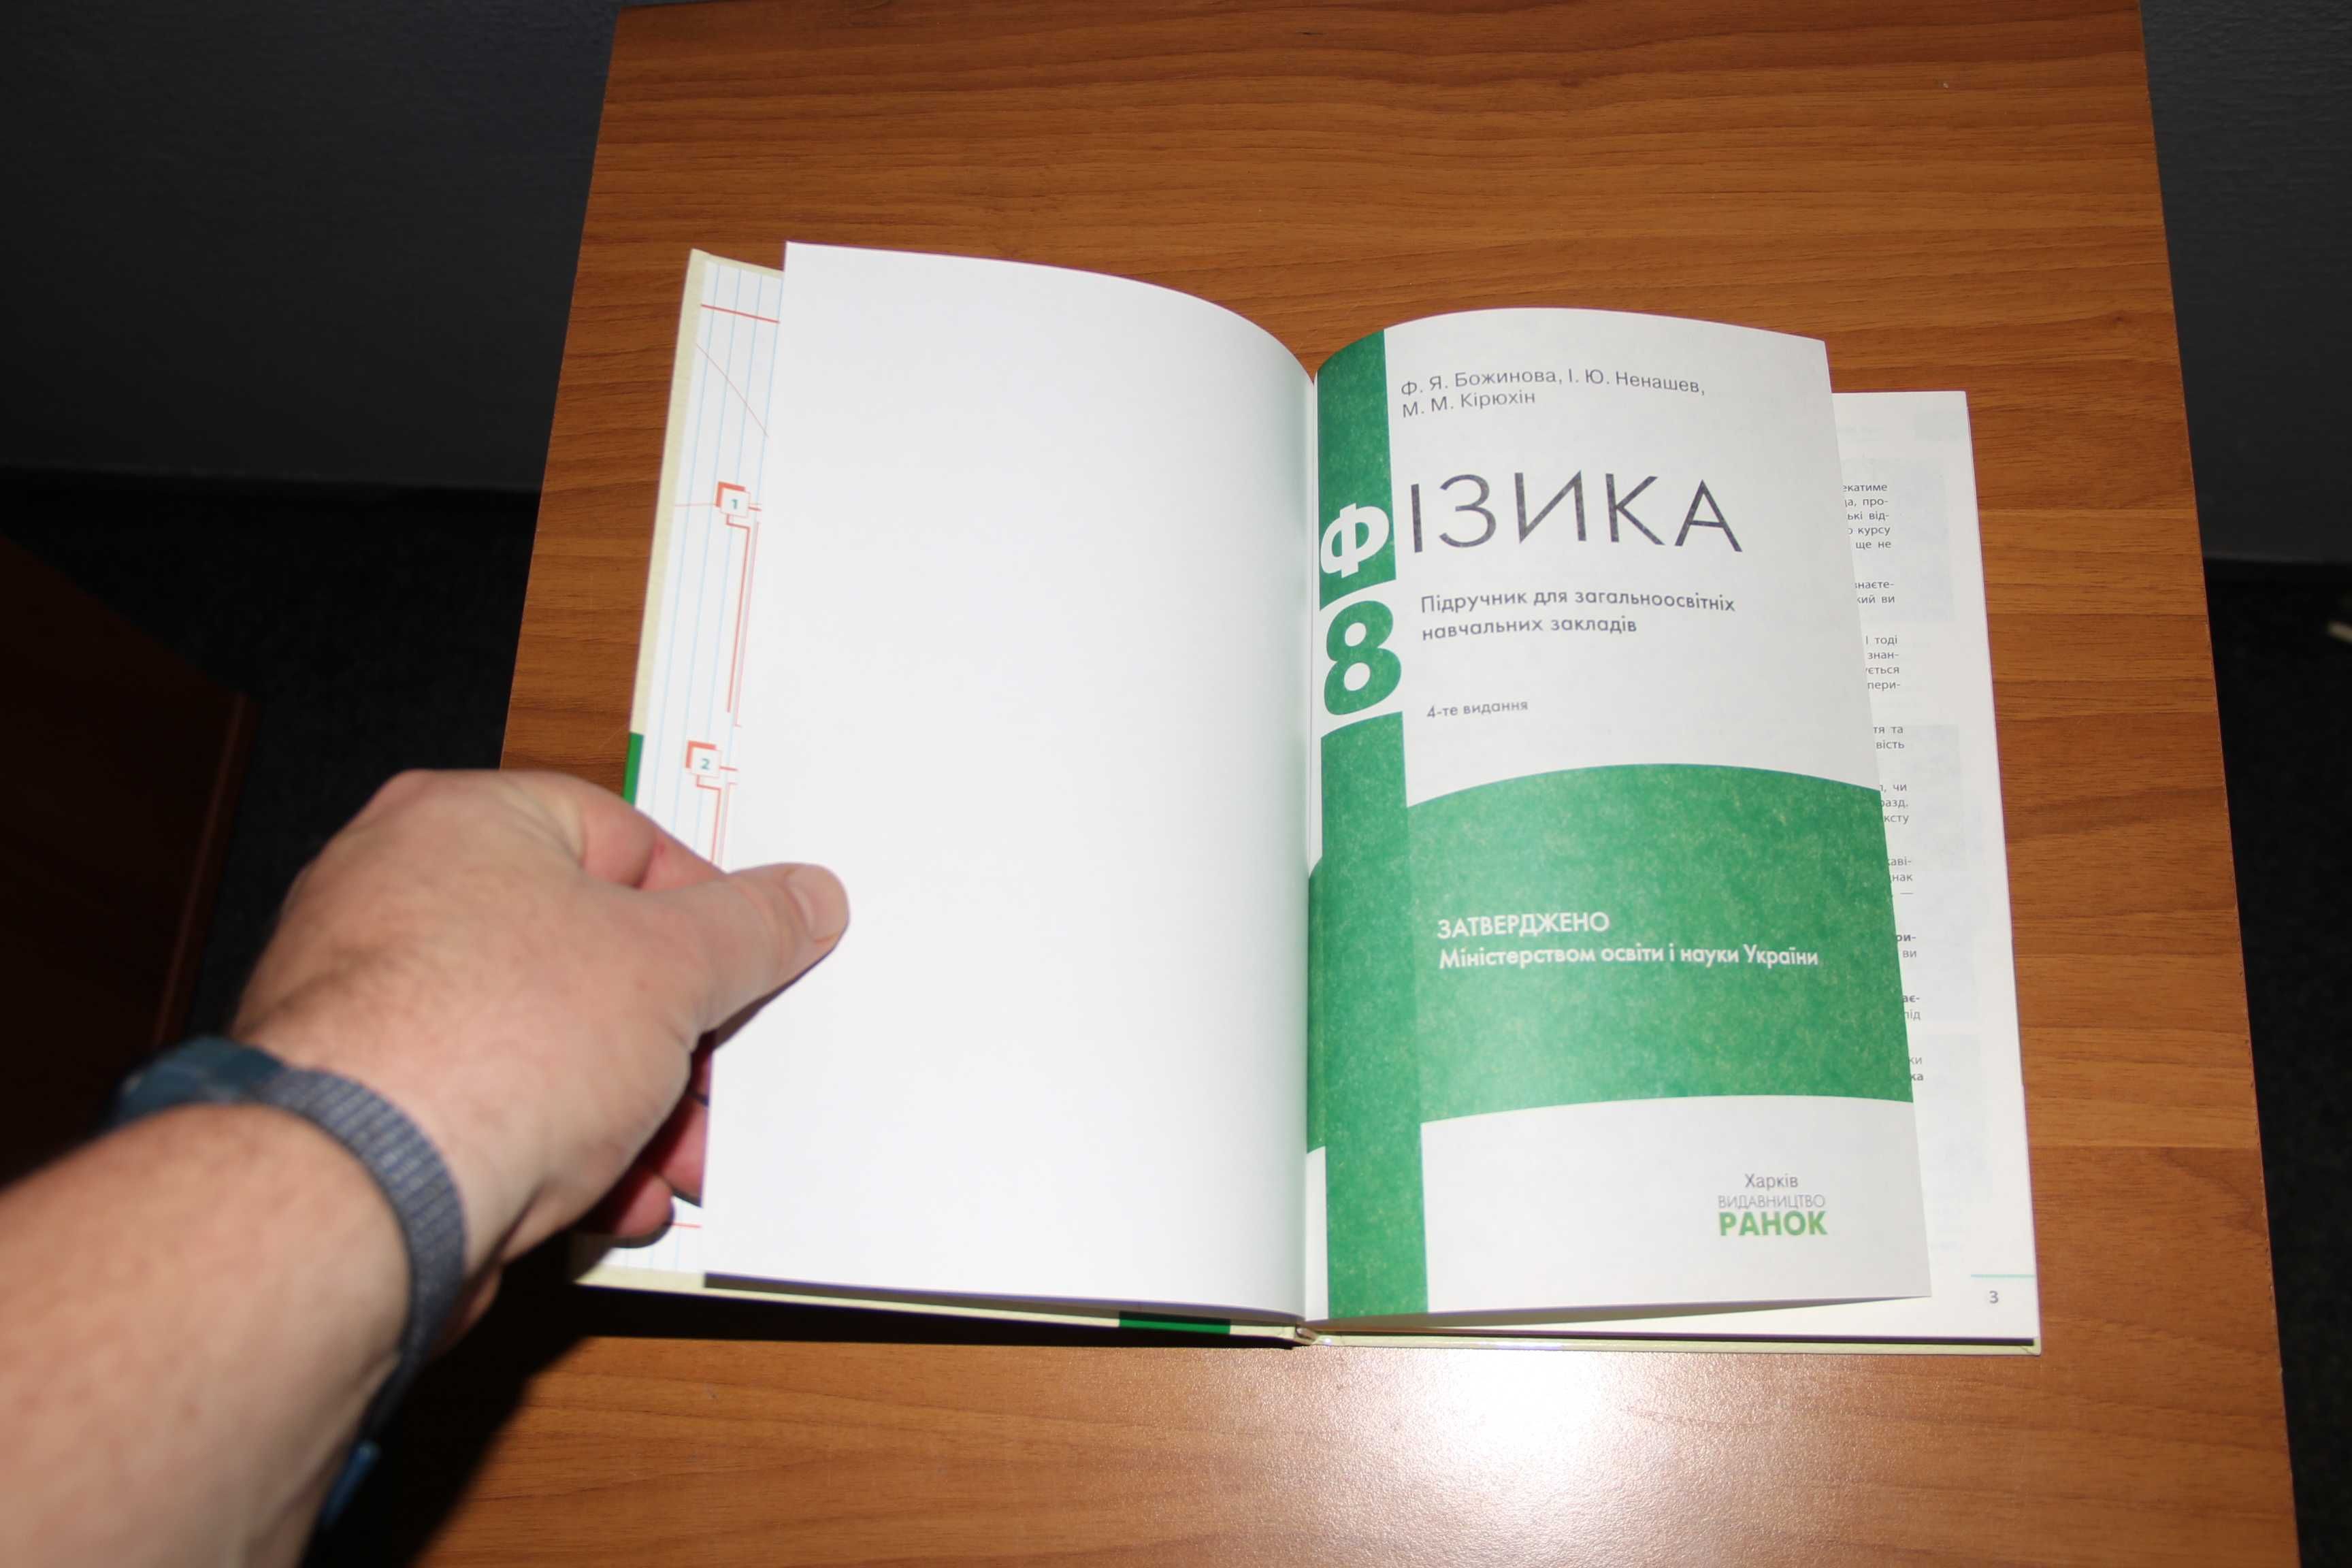 Фізика 8 клас: Божинова, Ненашев, Кiрюхiн- 2013 ISBN 978-966-672-210-5